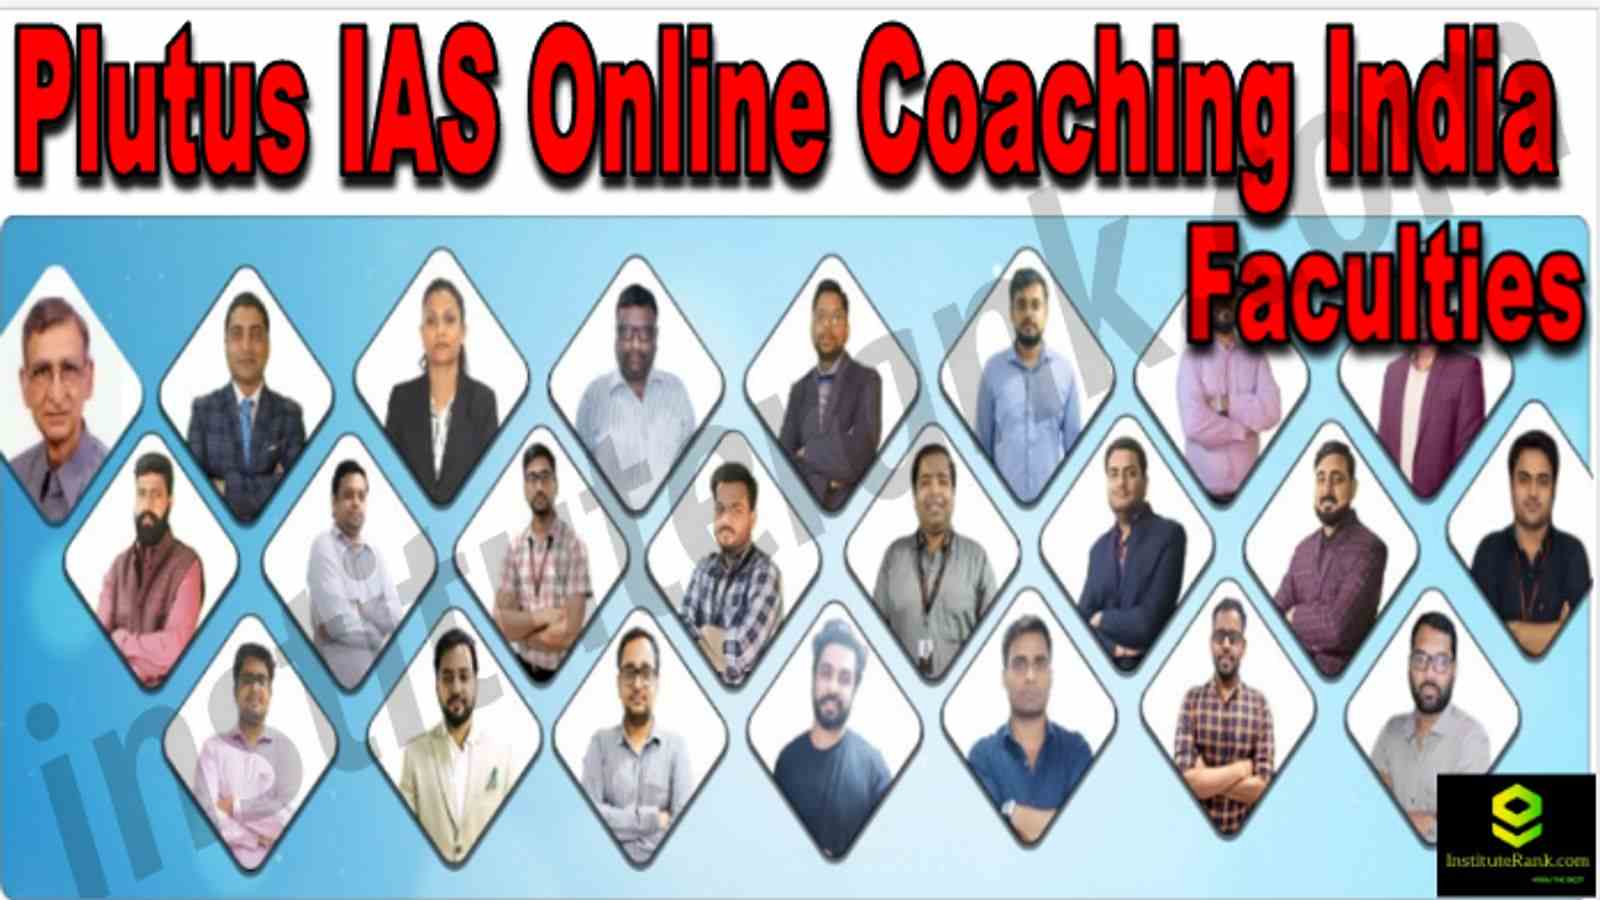 Plutus IAS Online Coaching India Reviews Faculties